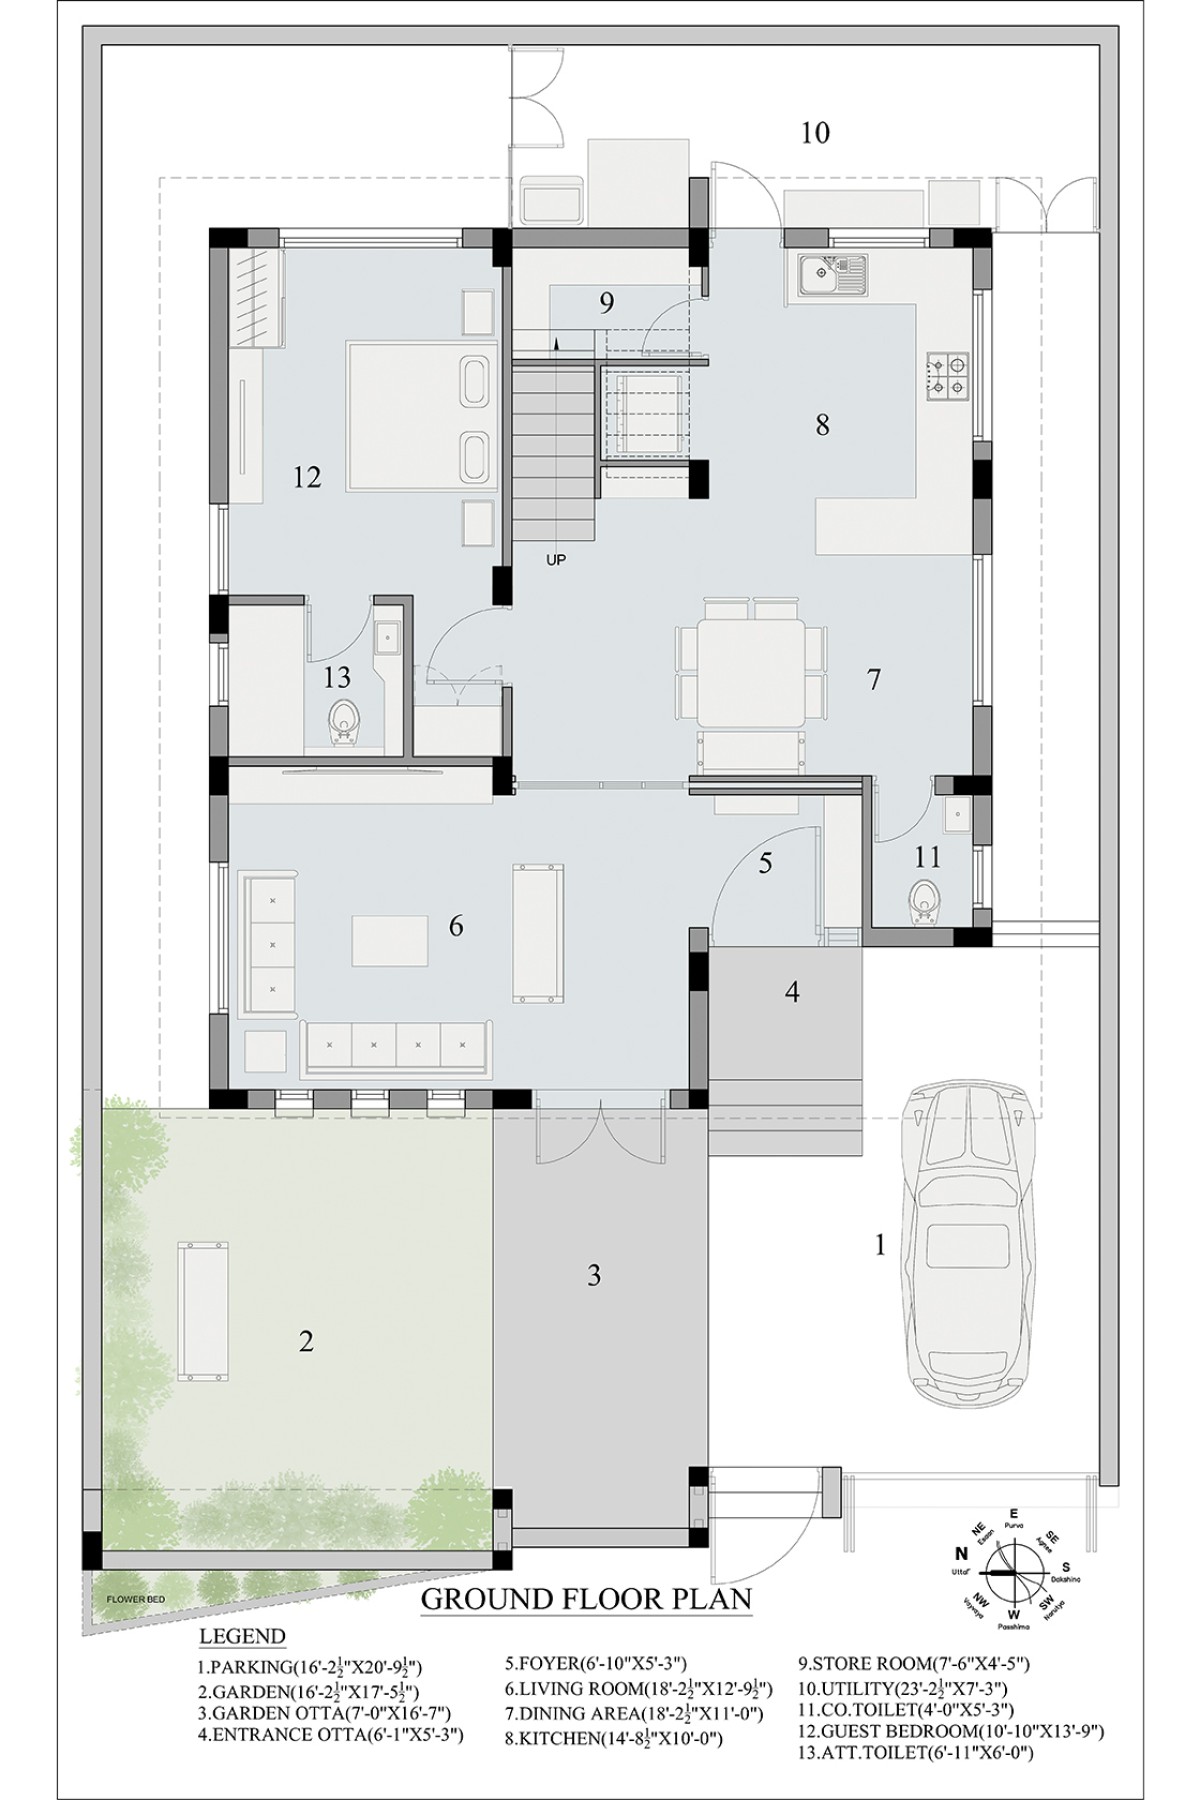 Ground floor plan of Terracotta Screen House by Zzarna Sstudio